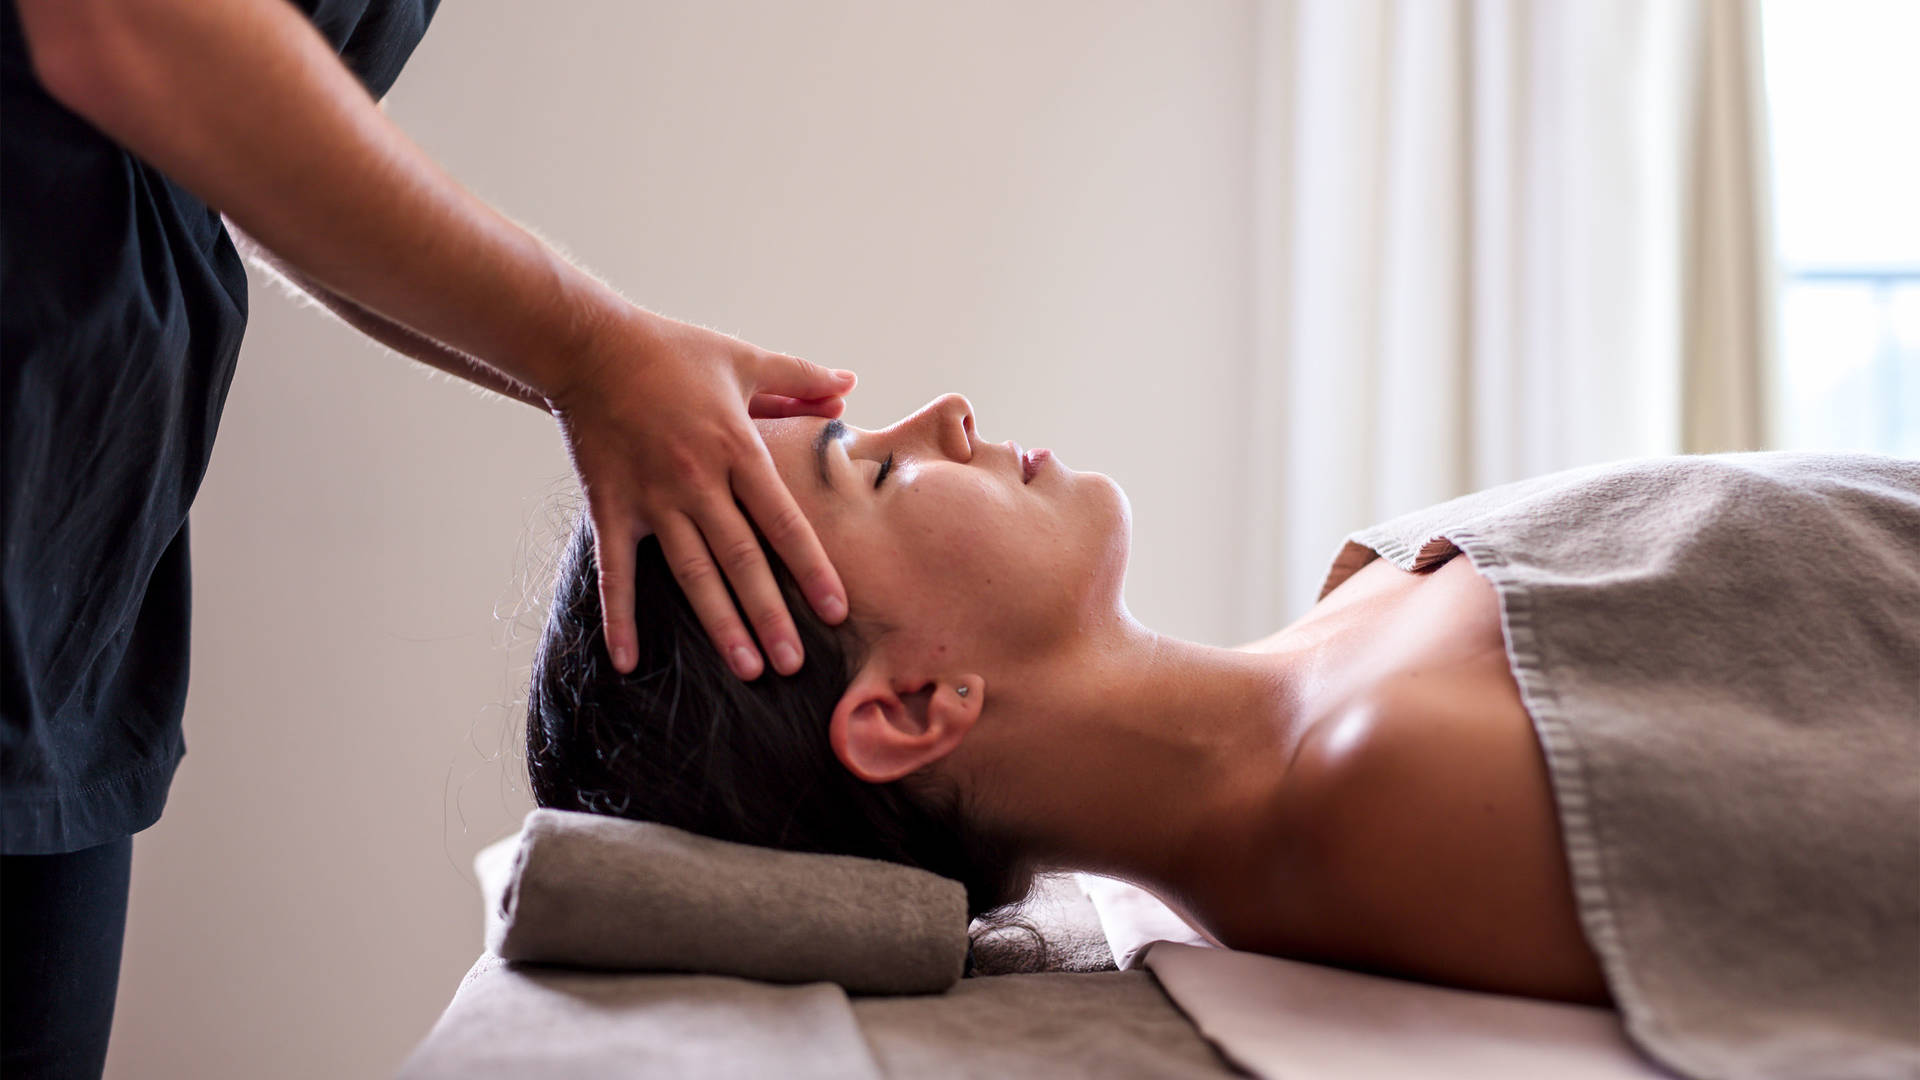 Jumeirah port soller talise spa massage woman